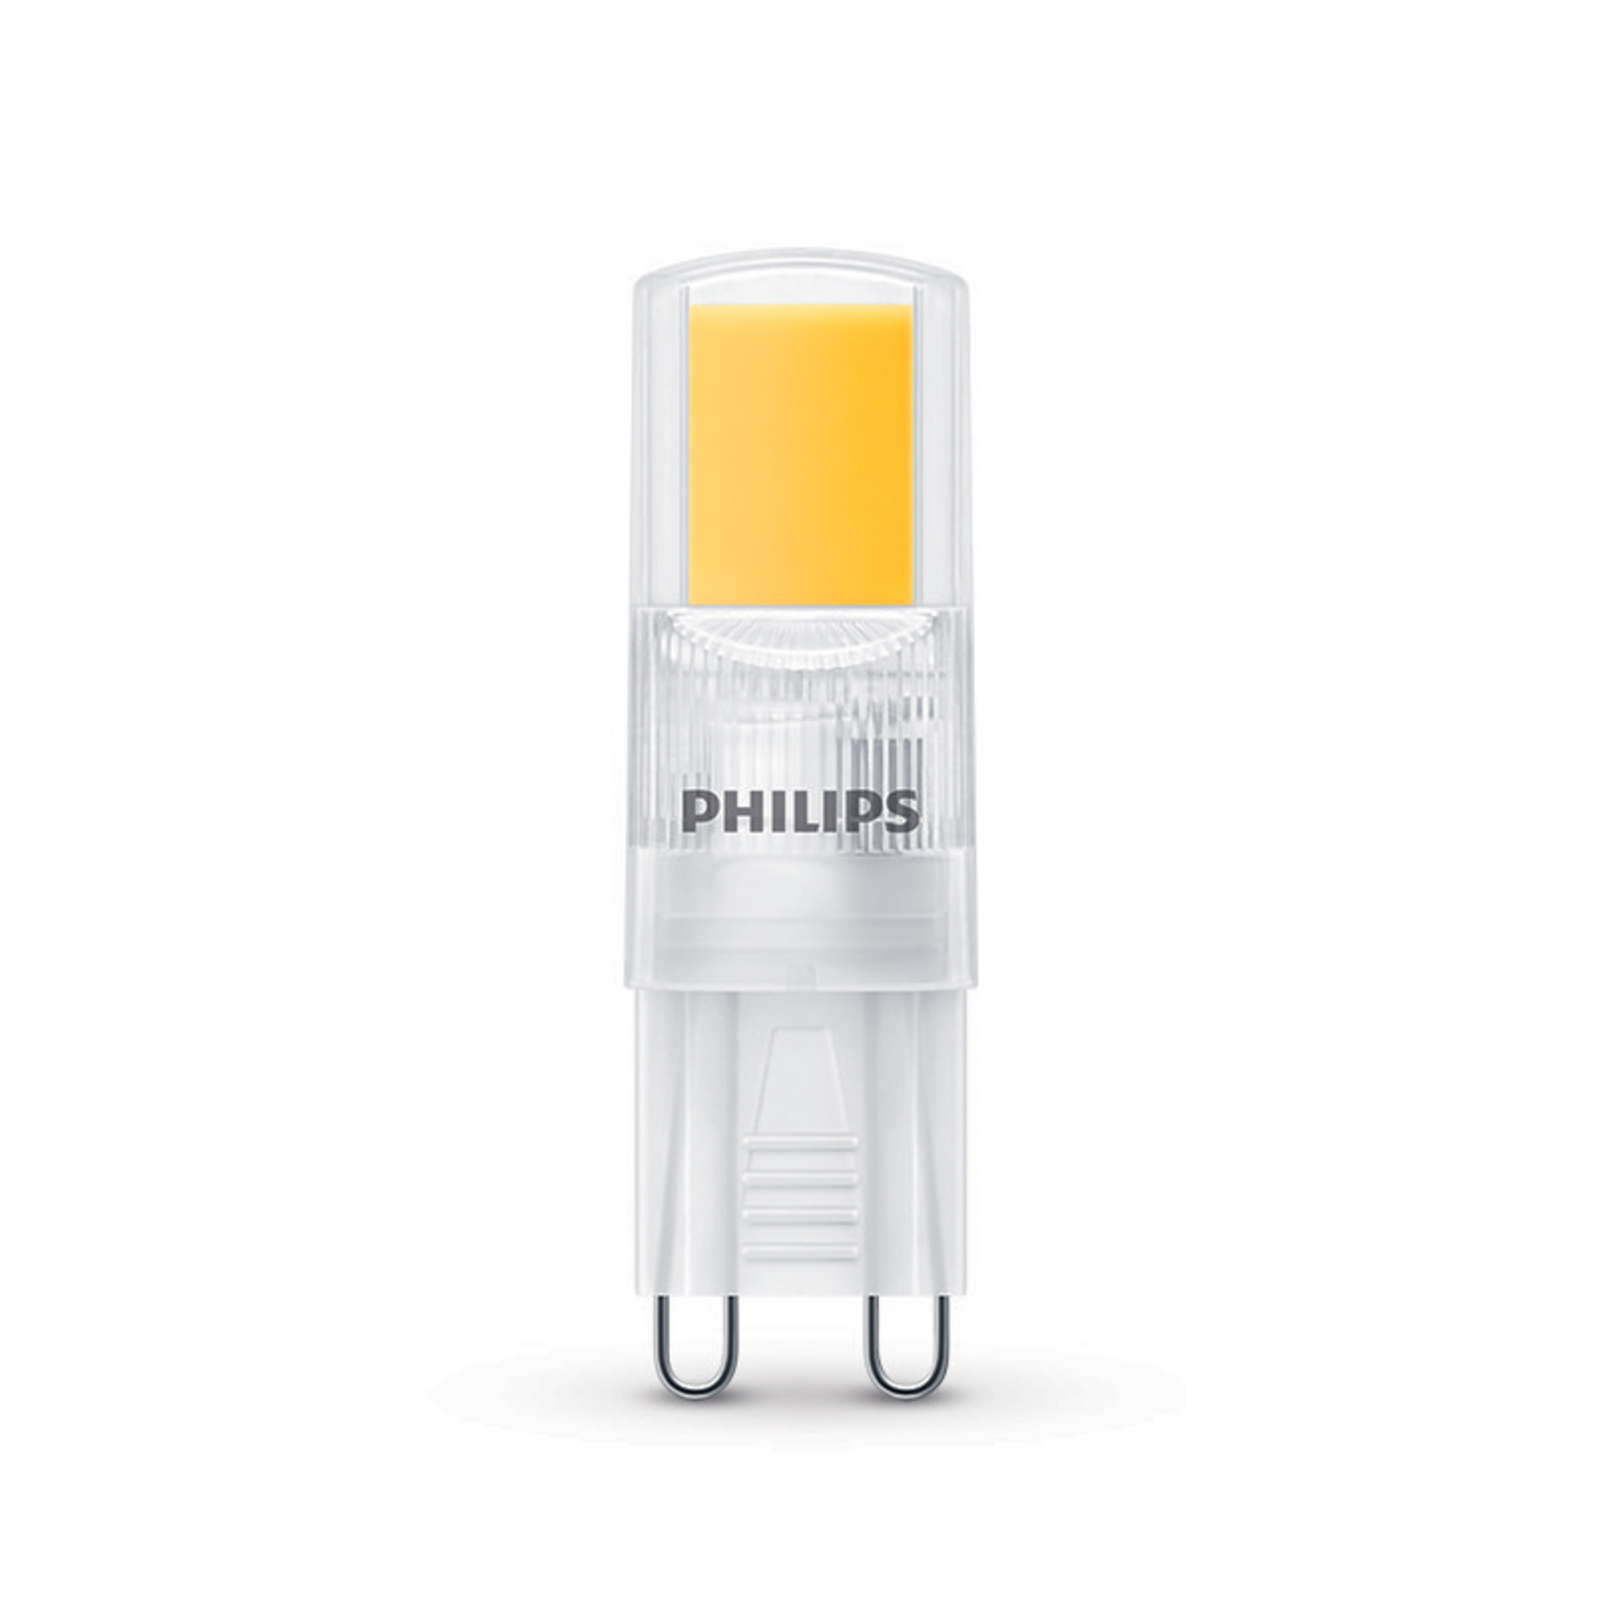 Philips LED bulb G9 2W 220lm 2700K clear x3